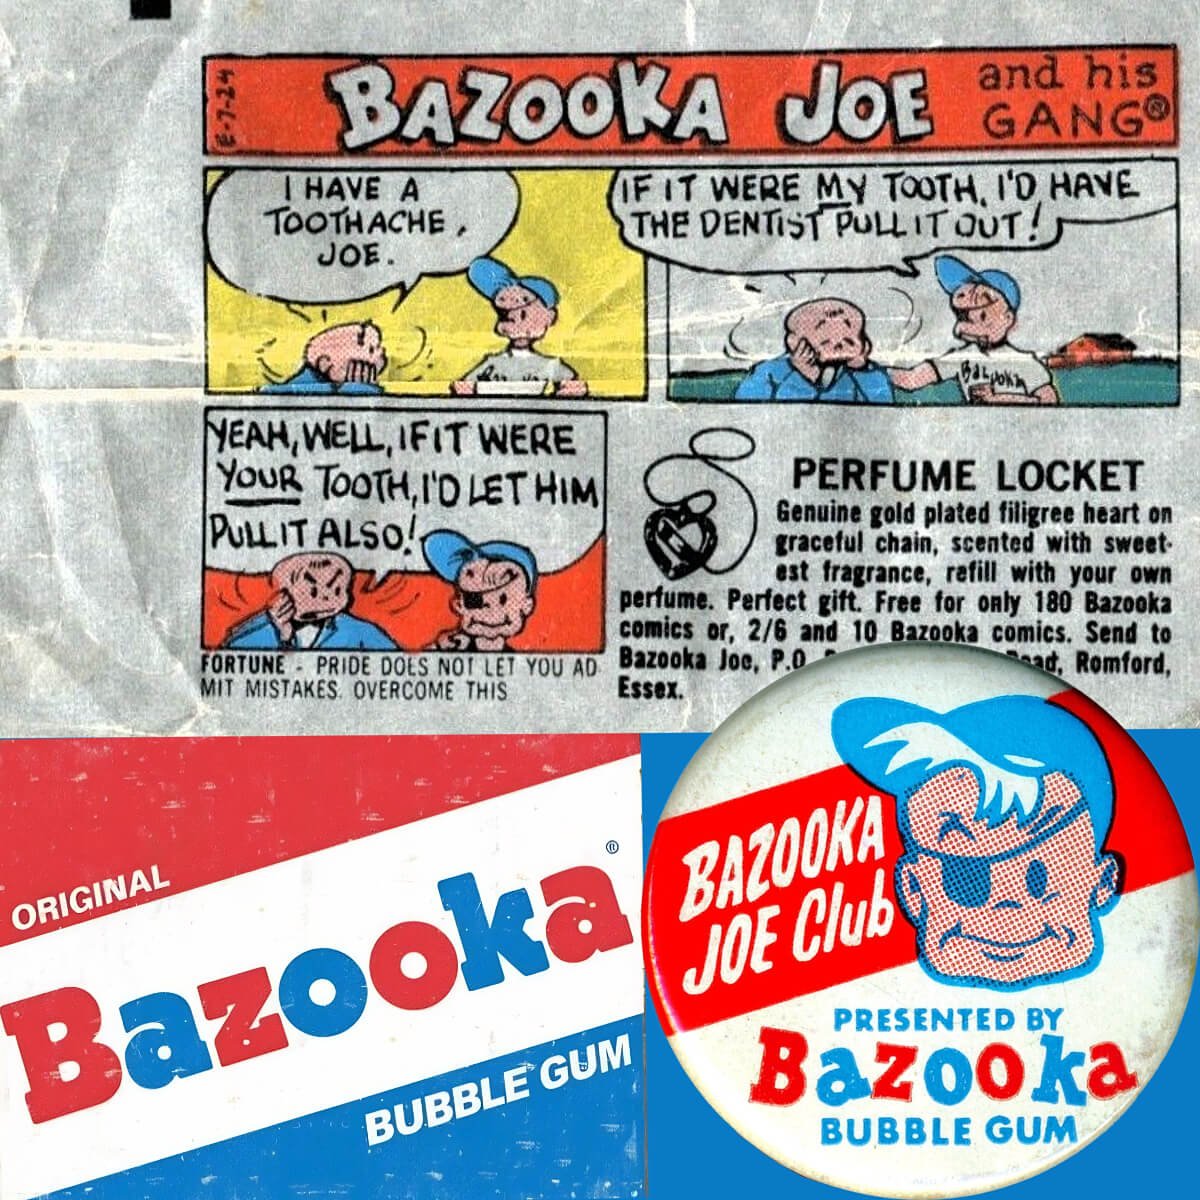 Bazooka Joe wax bubblegum wrapper and pin badge from the 1970s